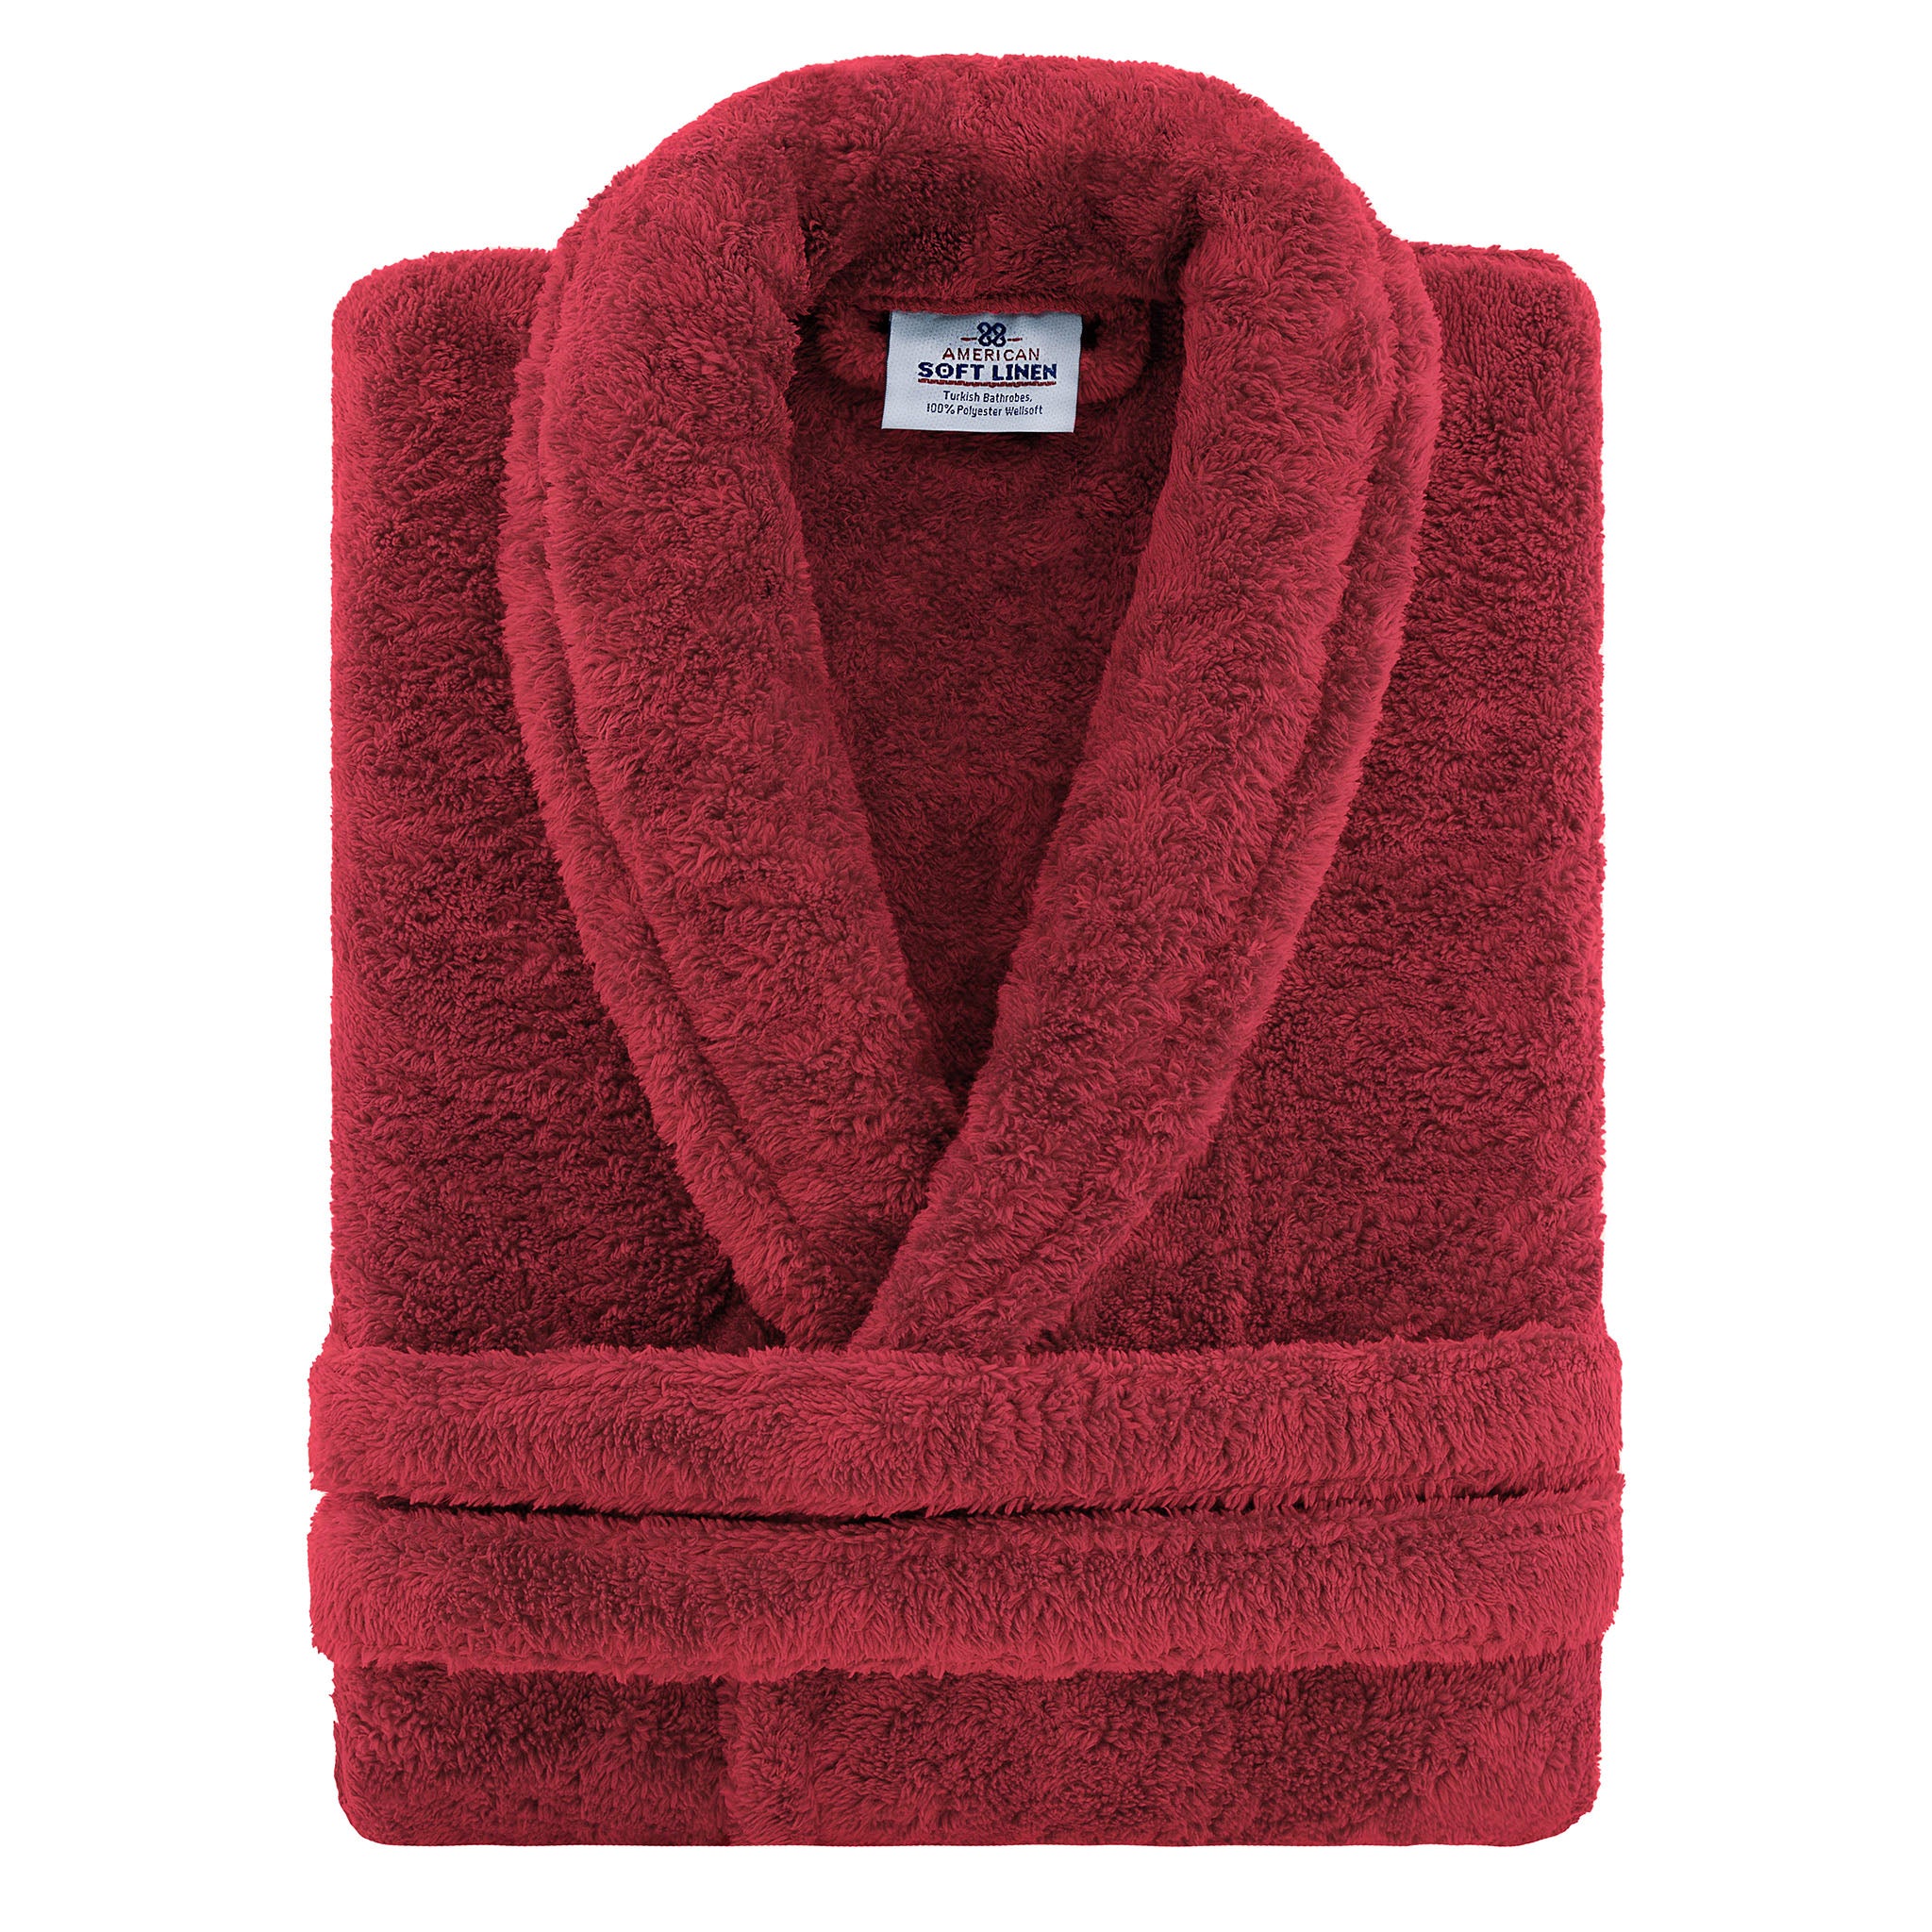 American Soft Linen Super Soft, Absorbent and Fluffy, Unisex Fleece Bathrobe M-L-Bordeaux-red-3